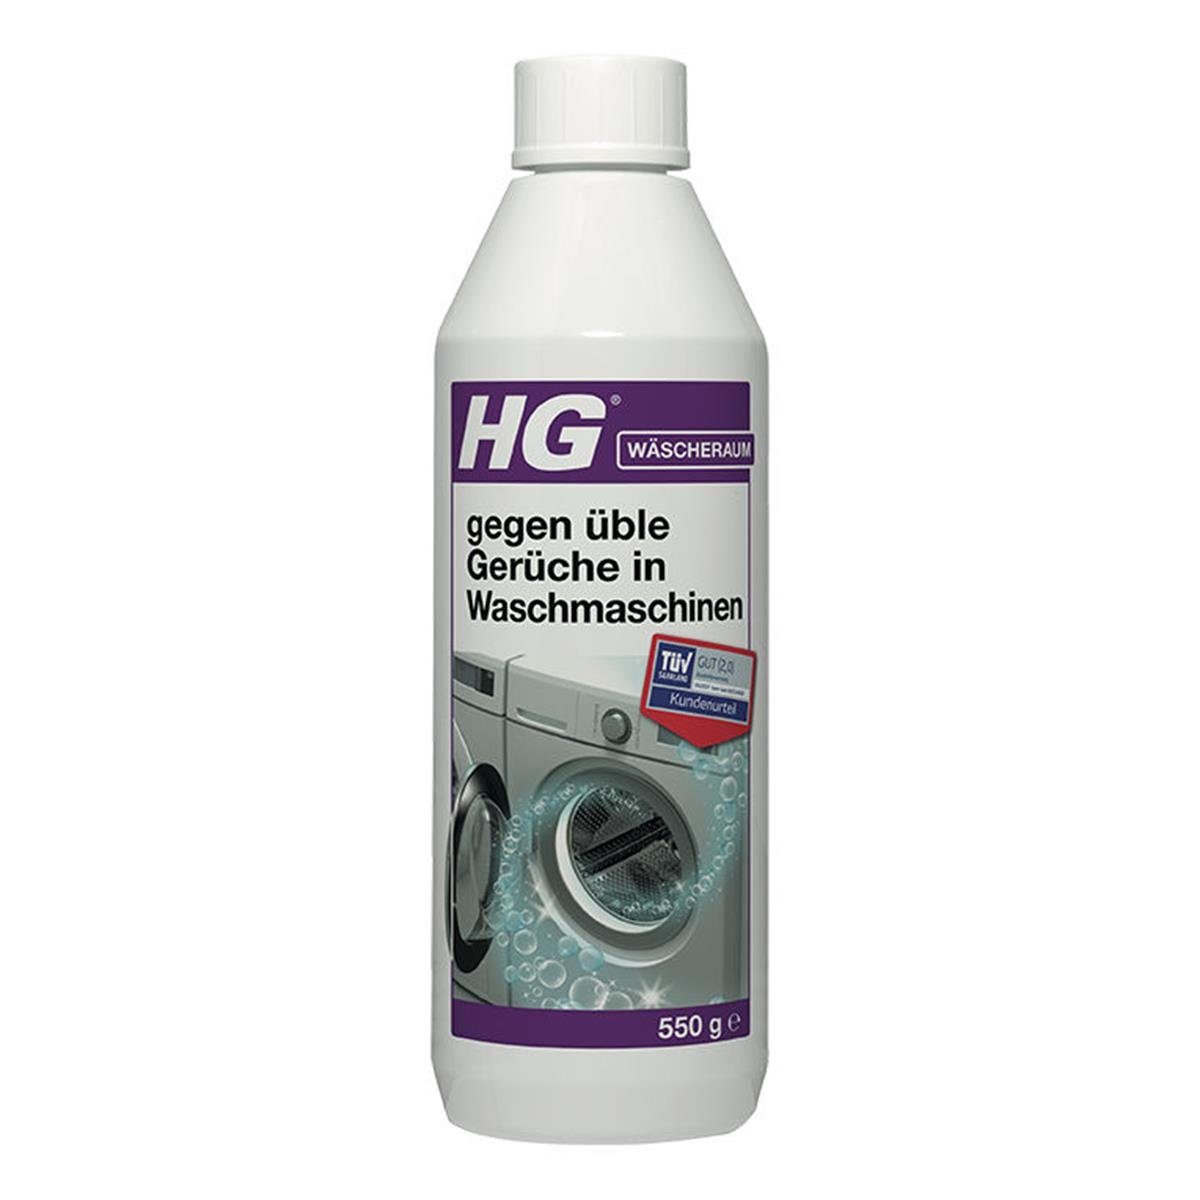 Waschmaschinen gegen 550g HG üble in Gerüche Pack) HG Spülmaschinenreiniger (1er